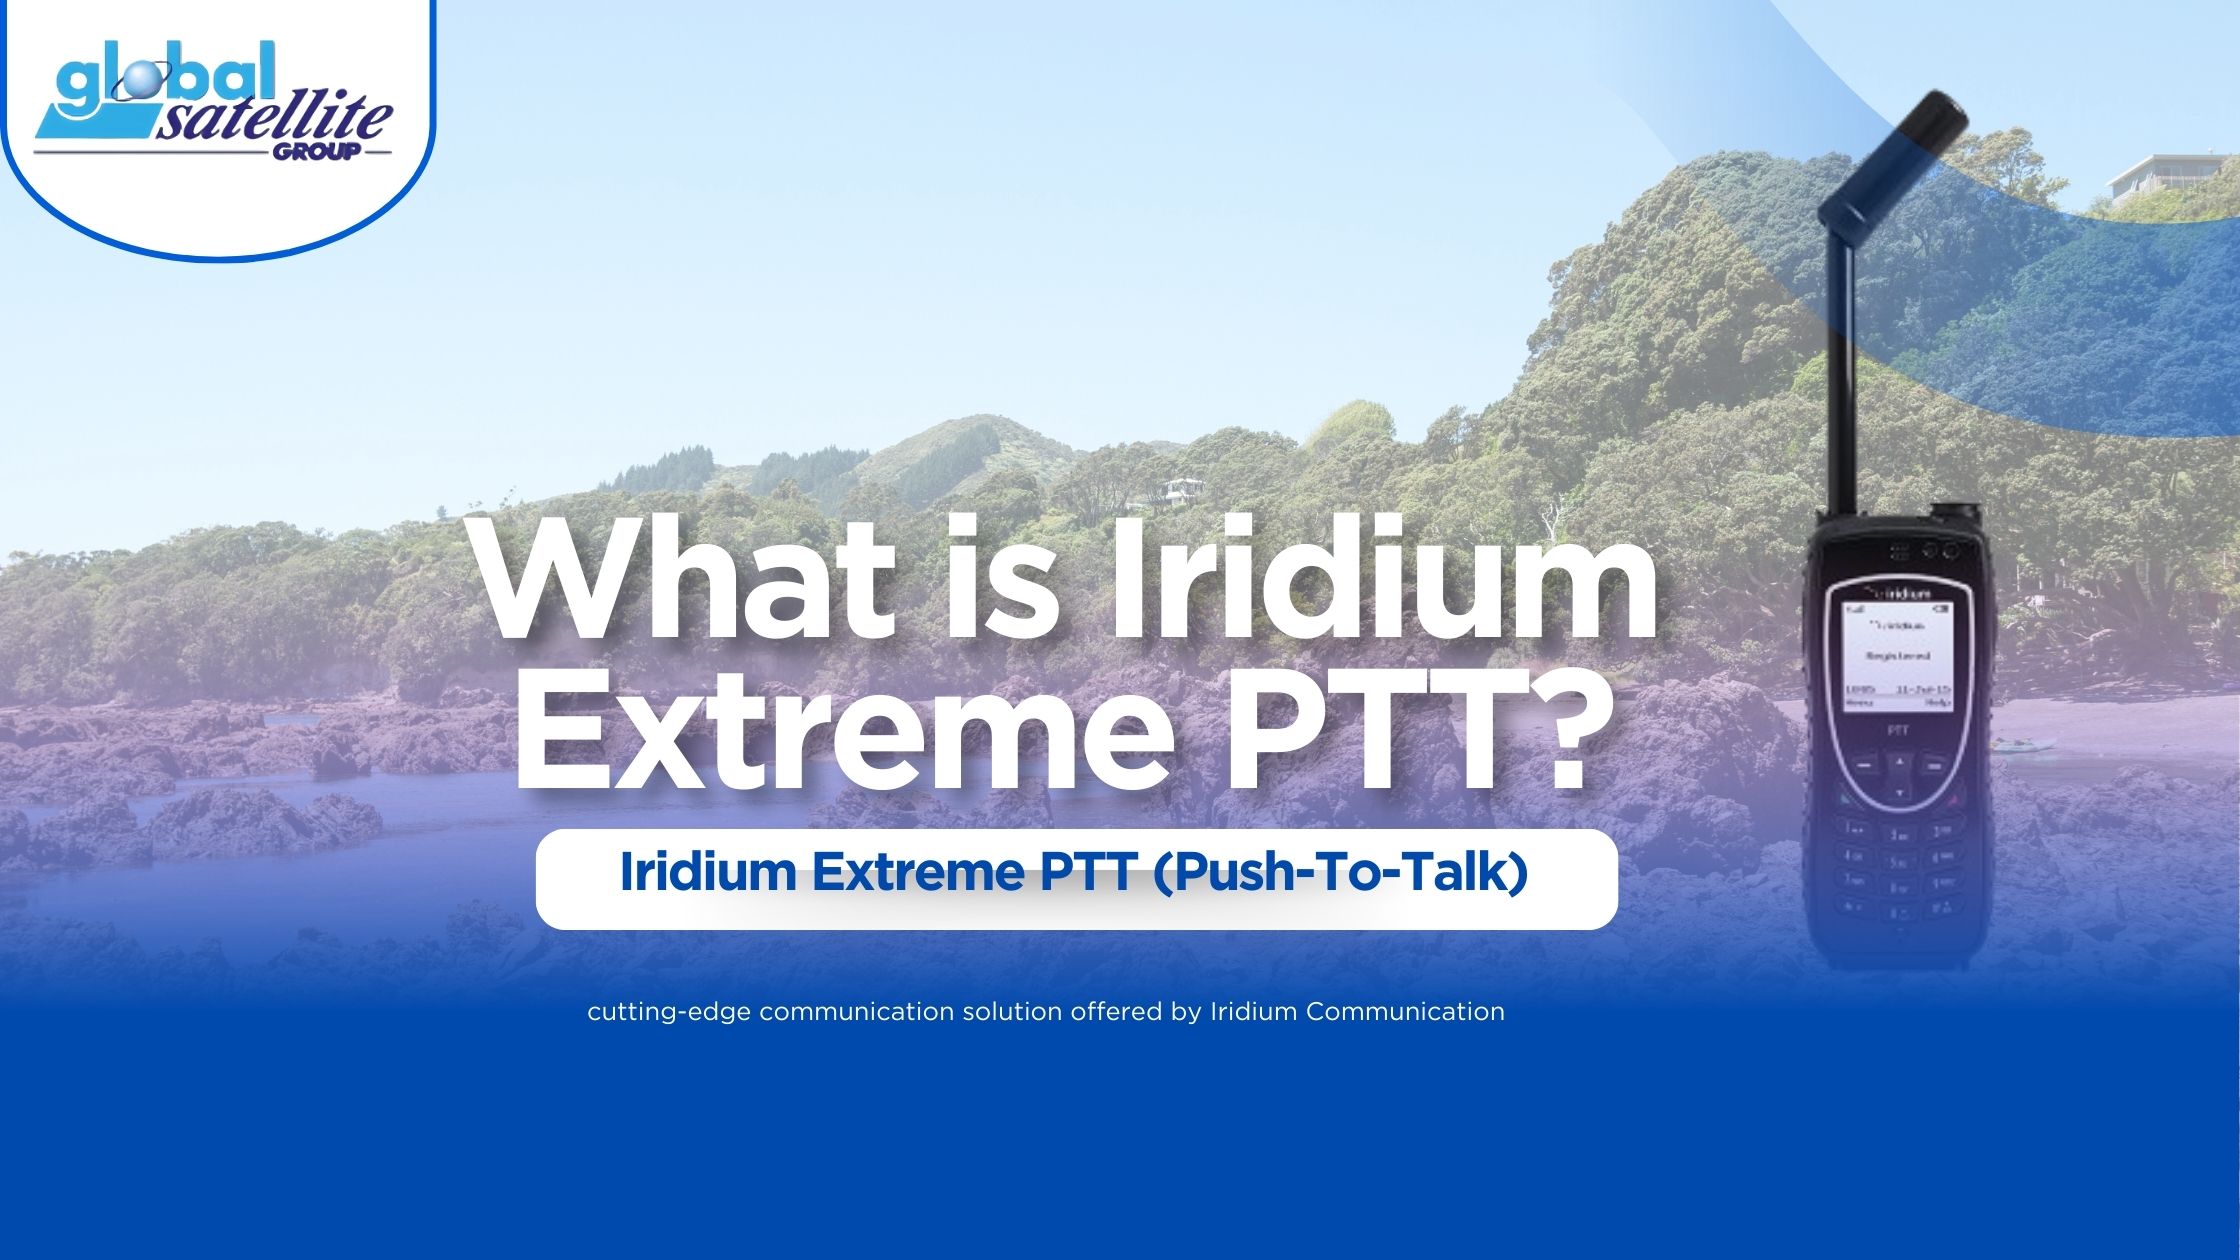 iridium extreme ptt